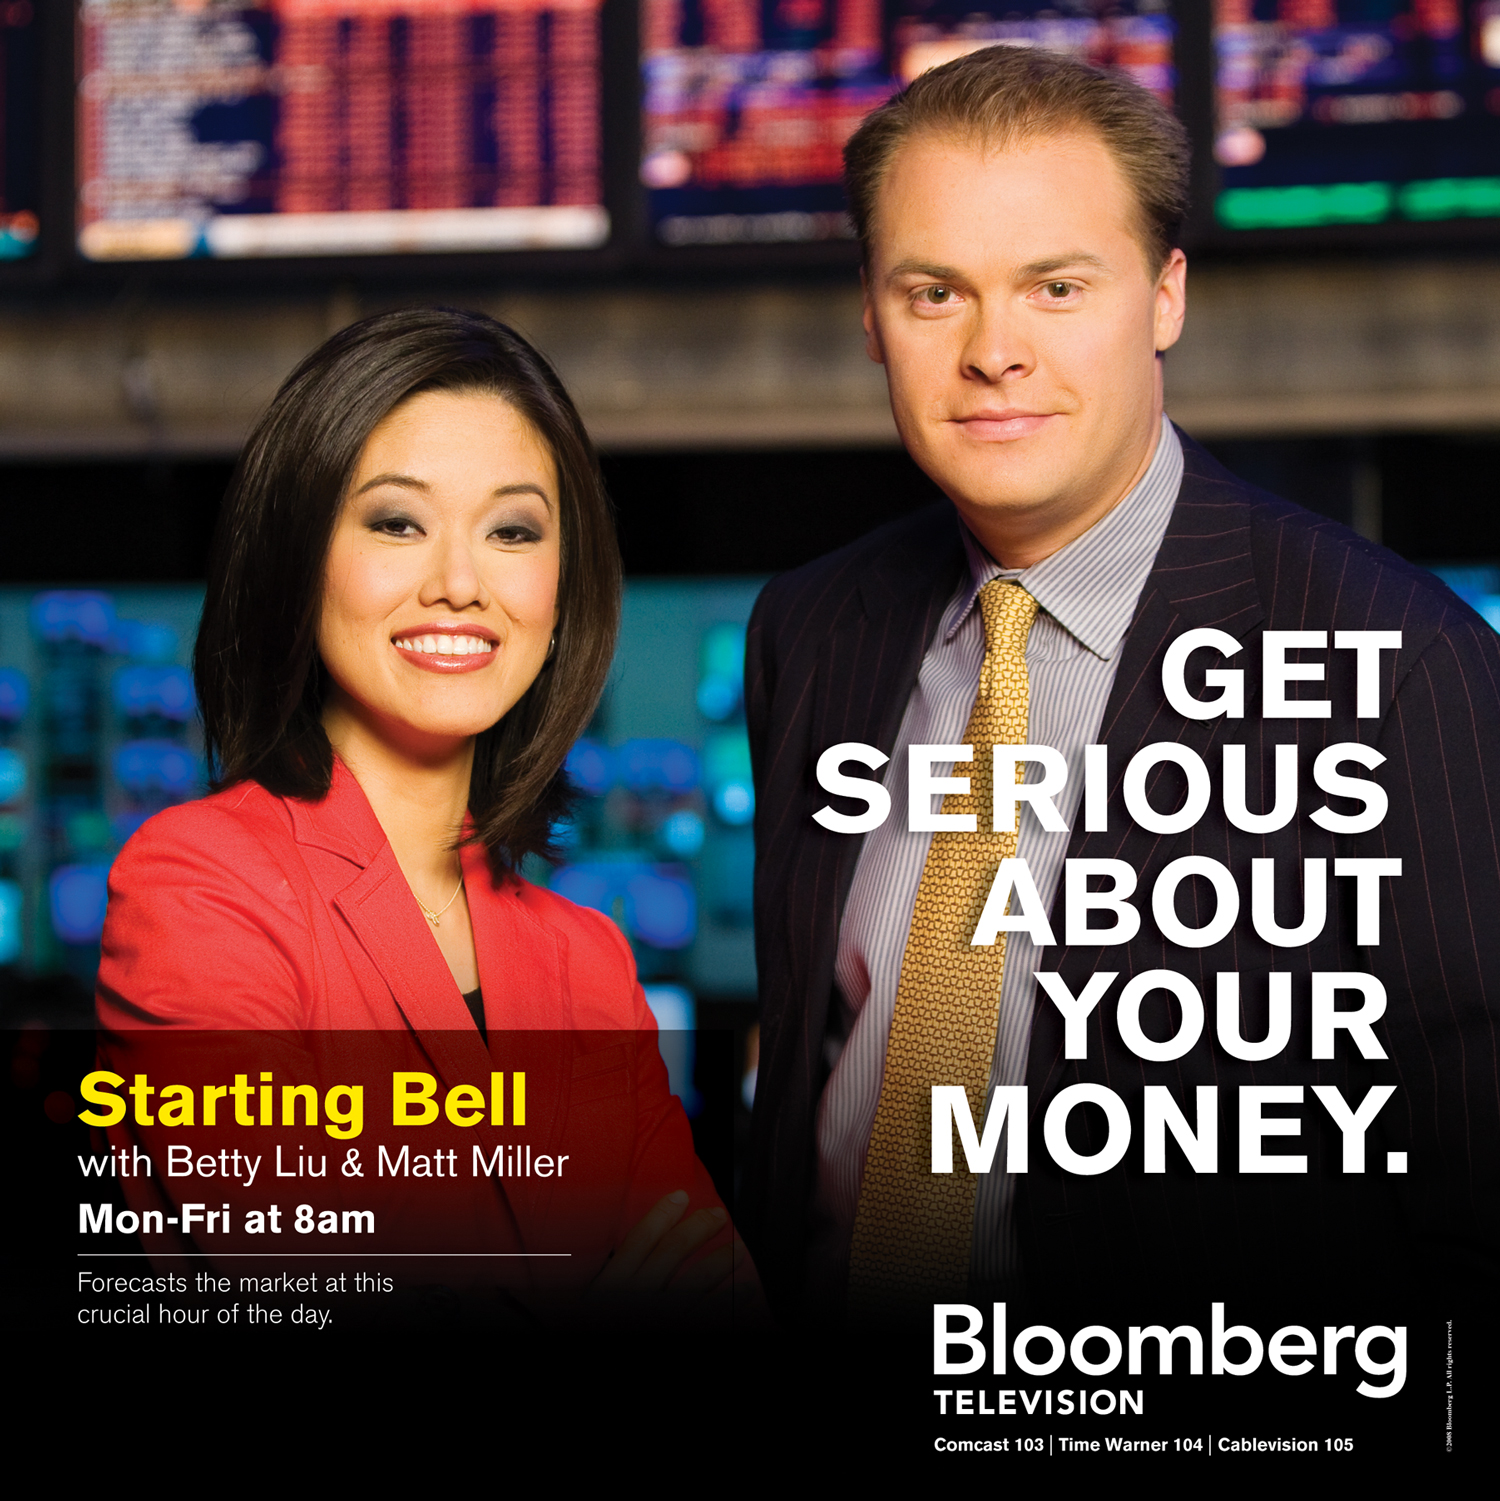 Bloomberg Starting Bell Advertisement